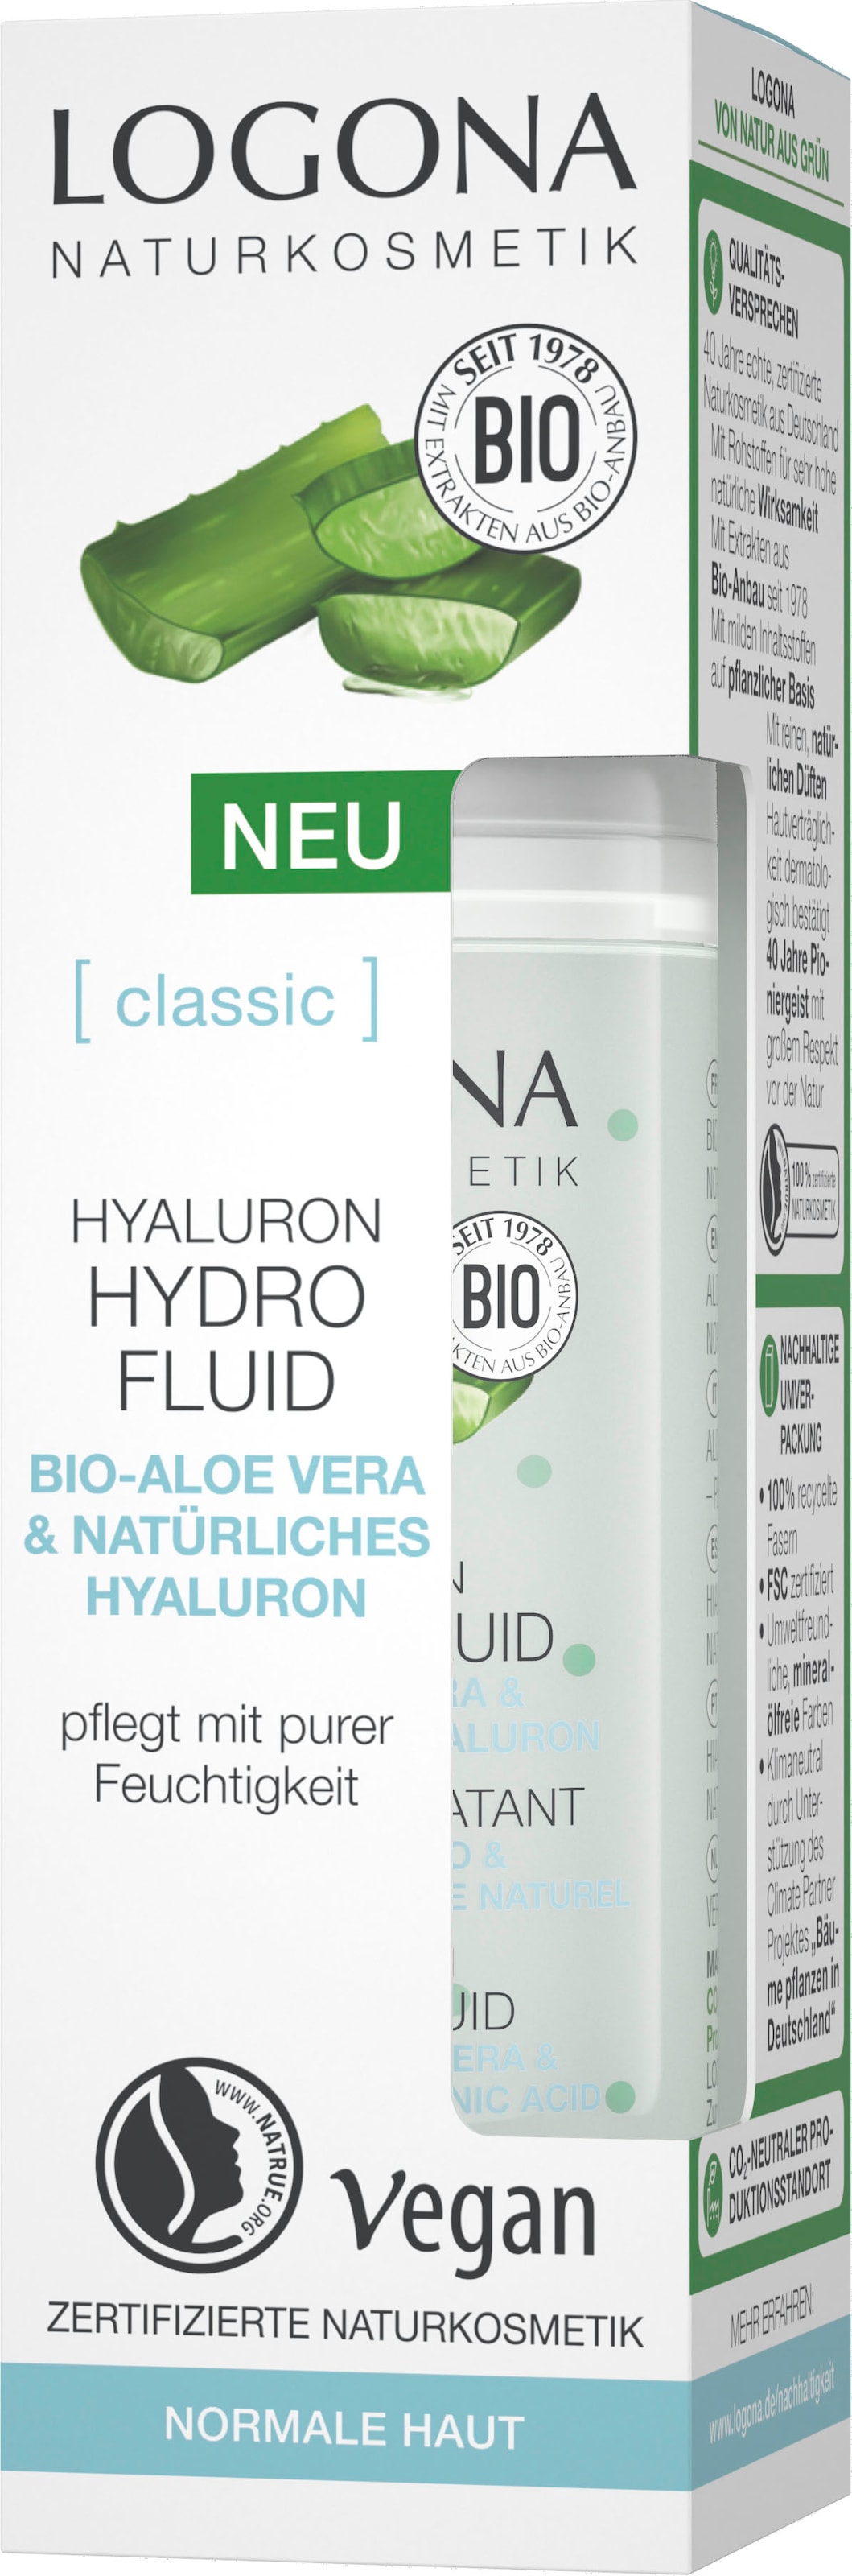 Hyaluron kaufen »Logona online | Fluid« Gesichtsfluid Hydro classic BAUR LOGONA